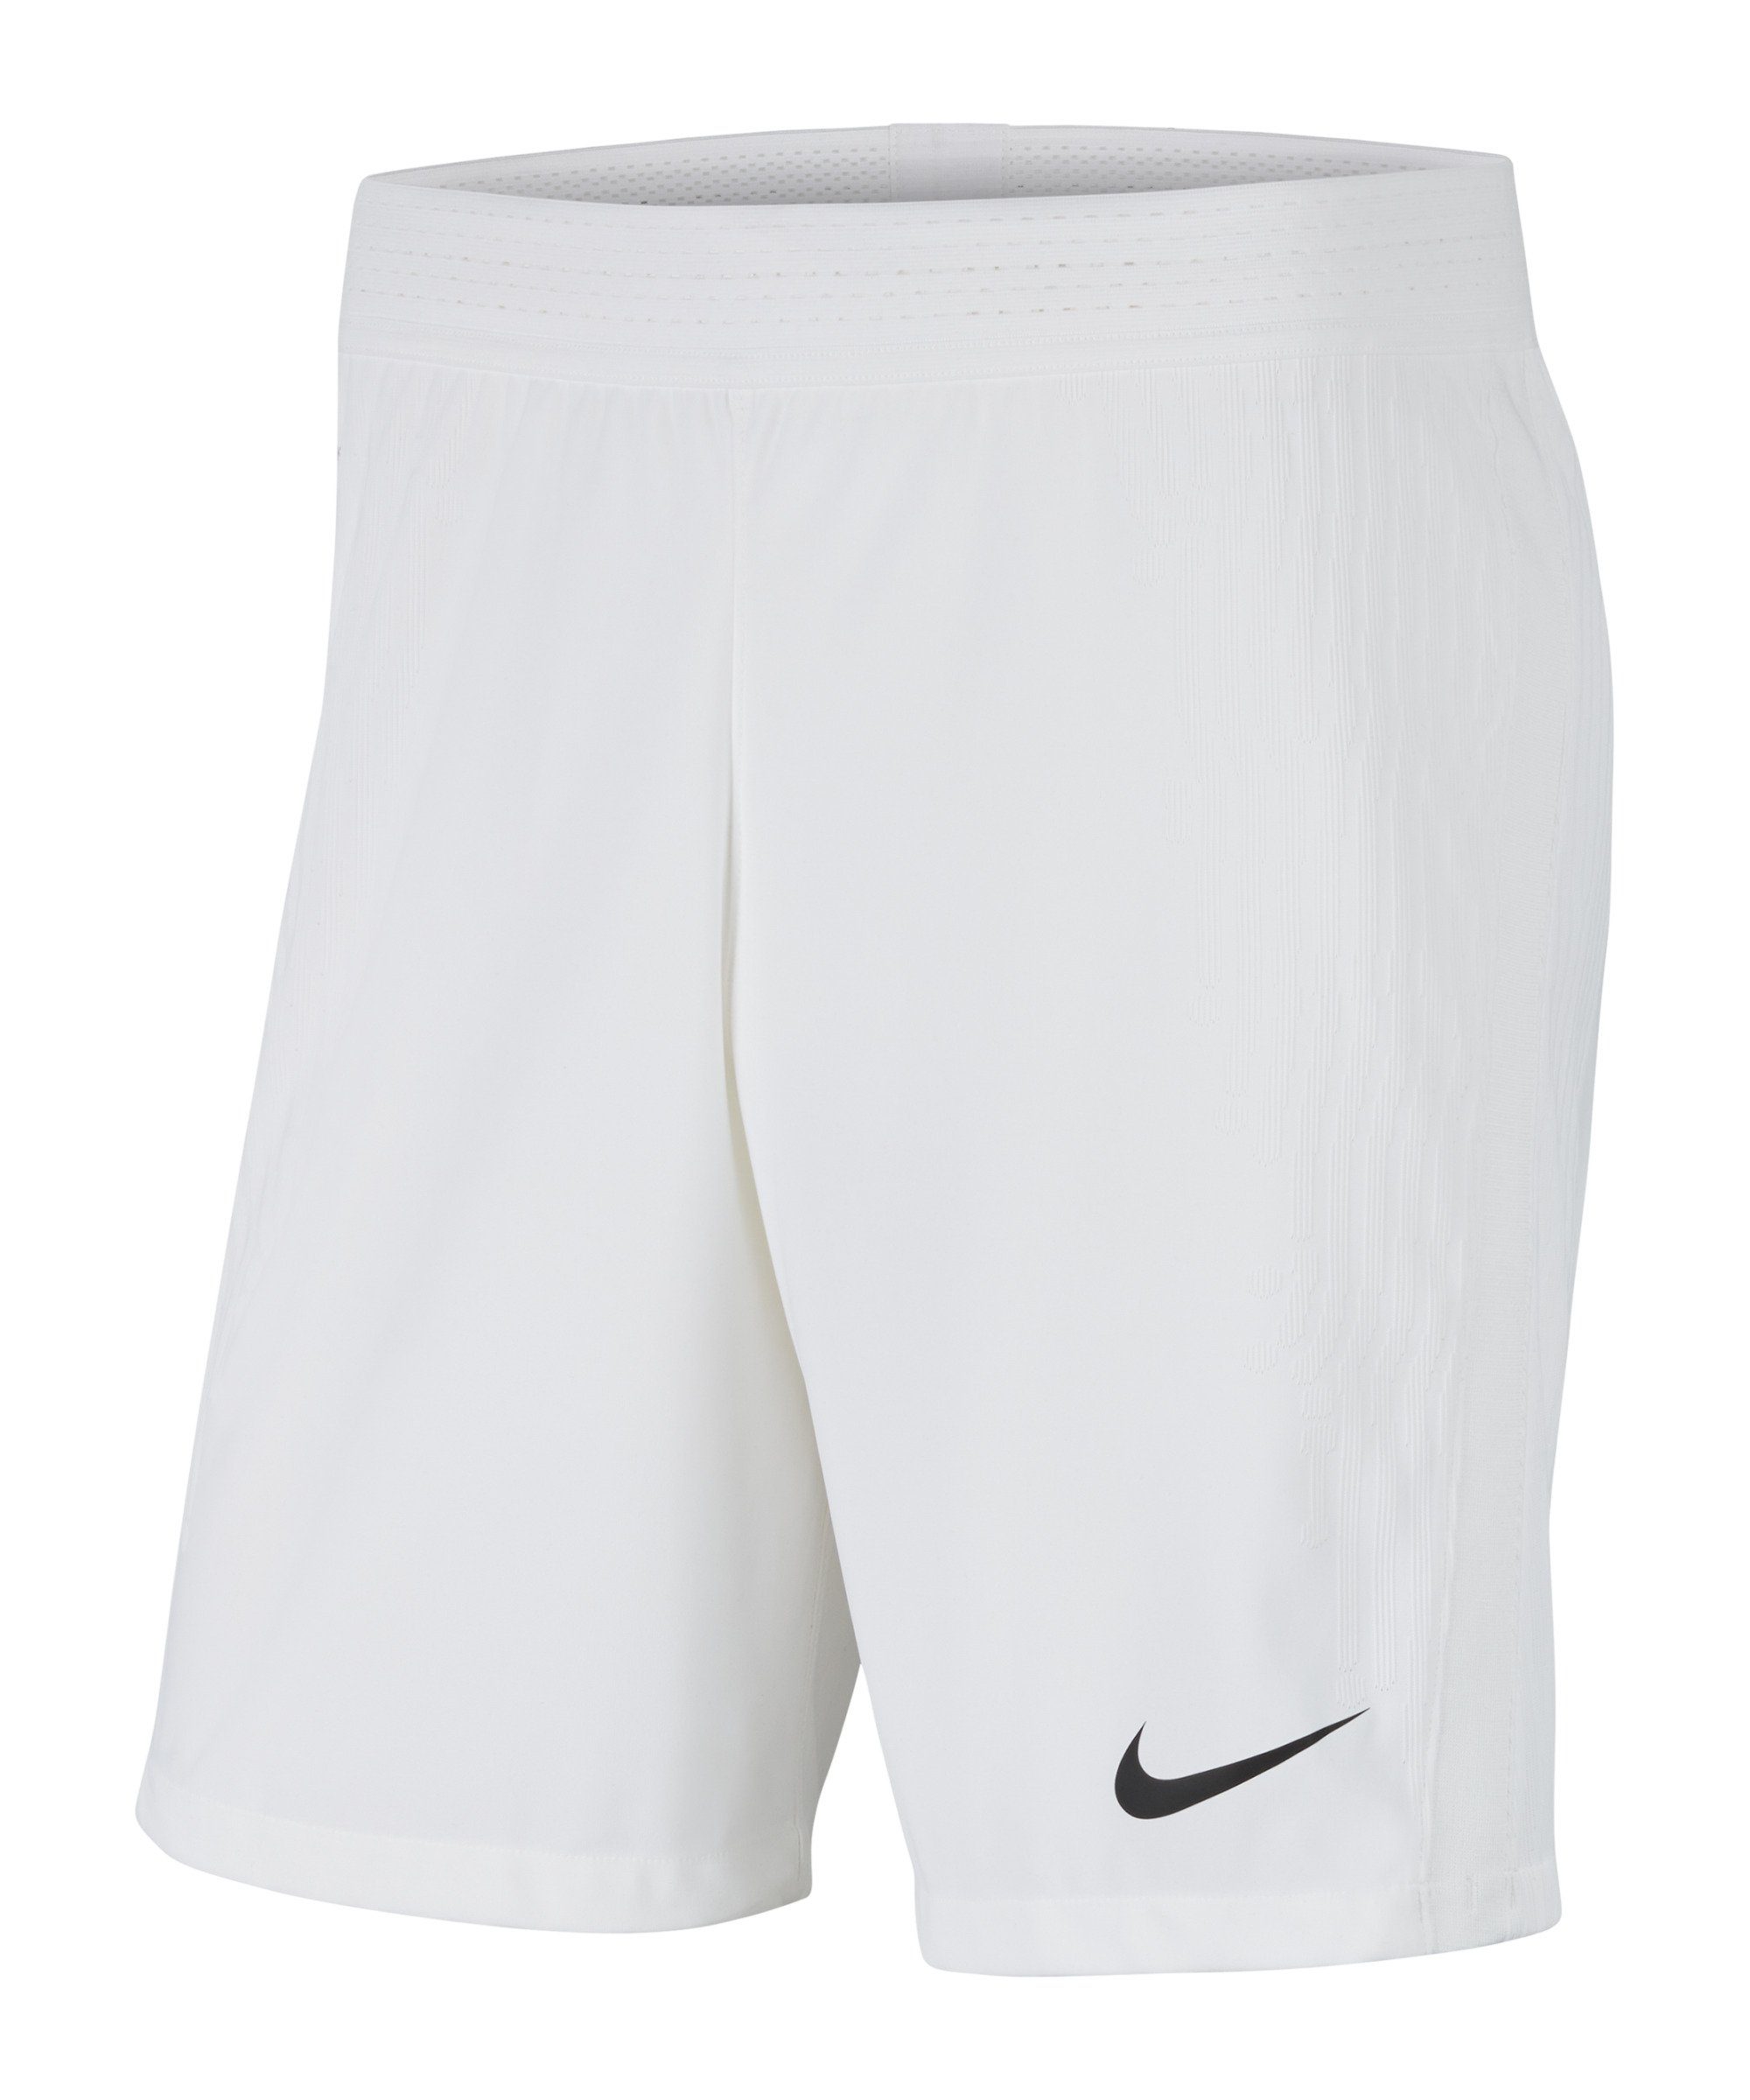 Nike Sporthose Vapor weissschwarz III Knit Short